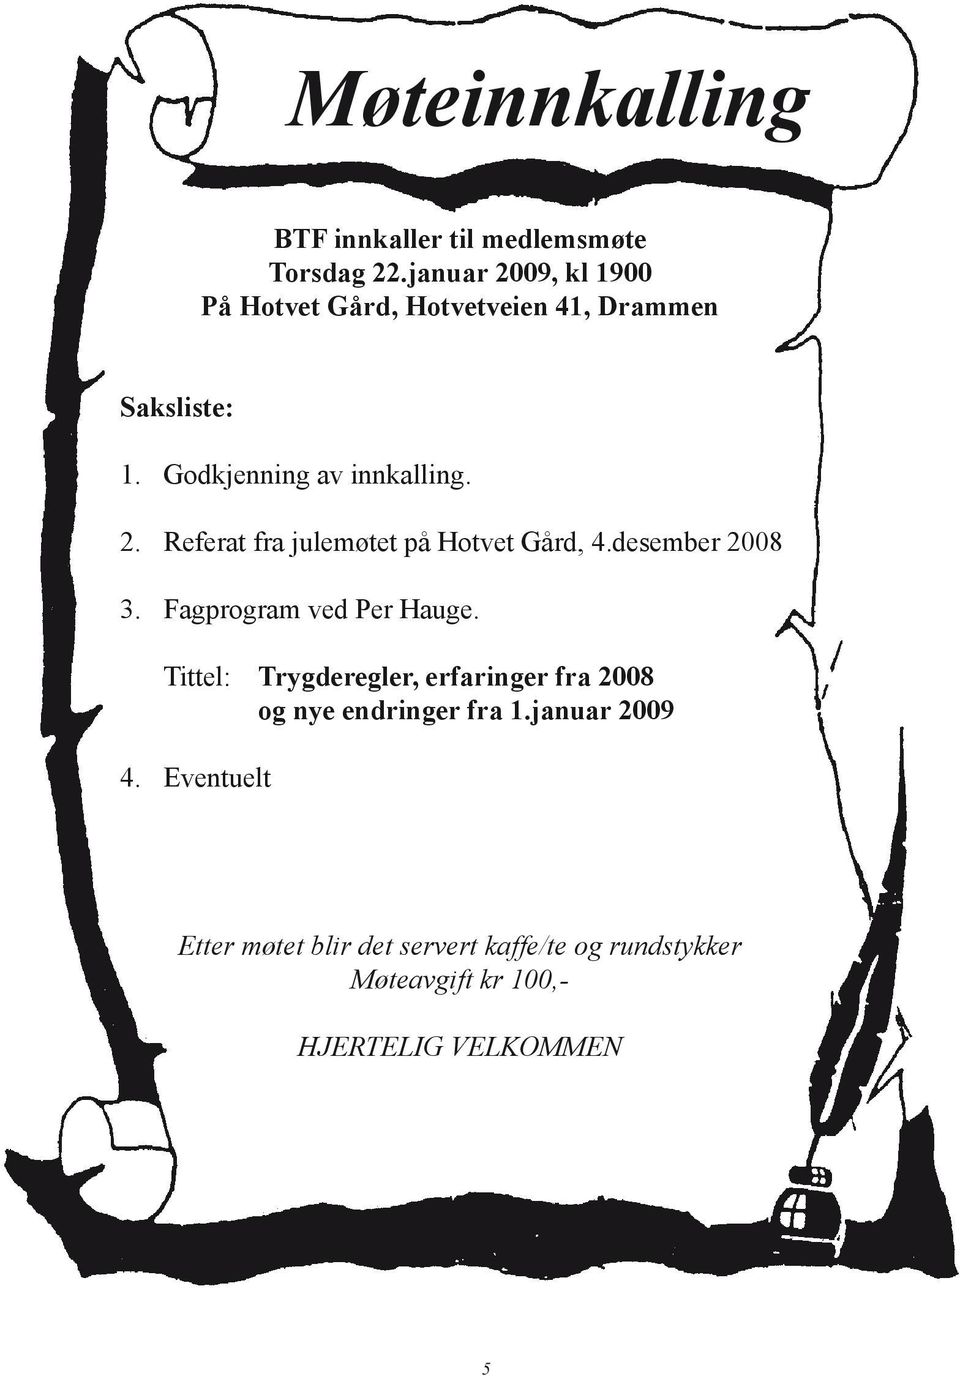 desember 2008 3. Fagprogram ved Per Hauge.